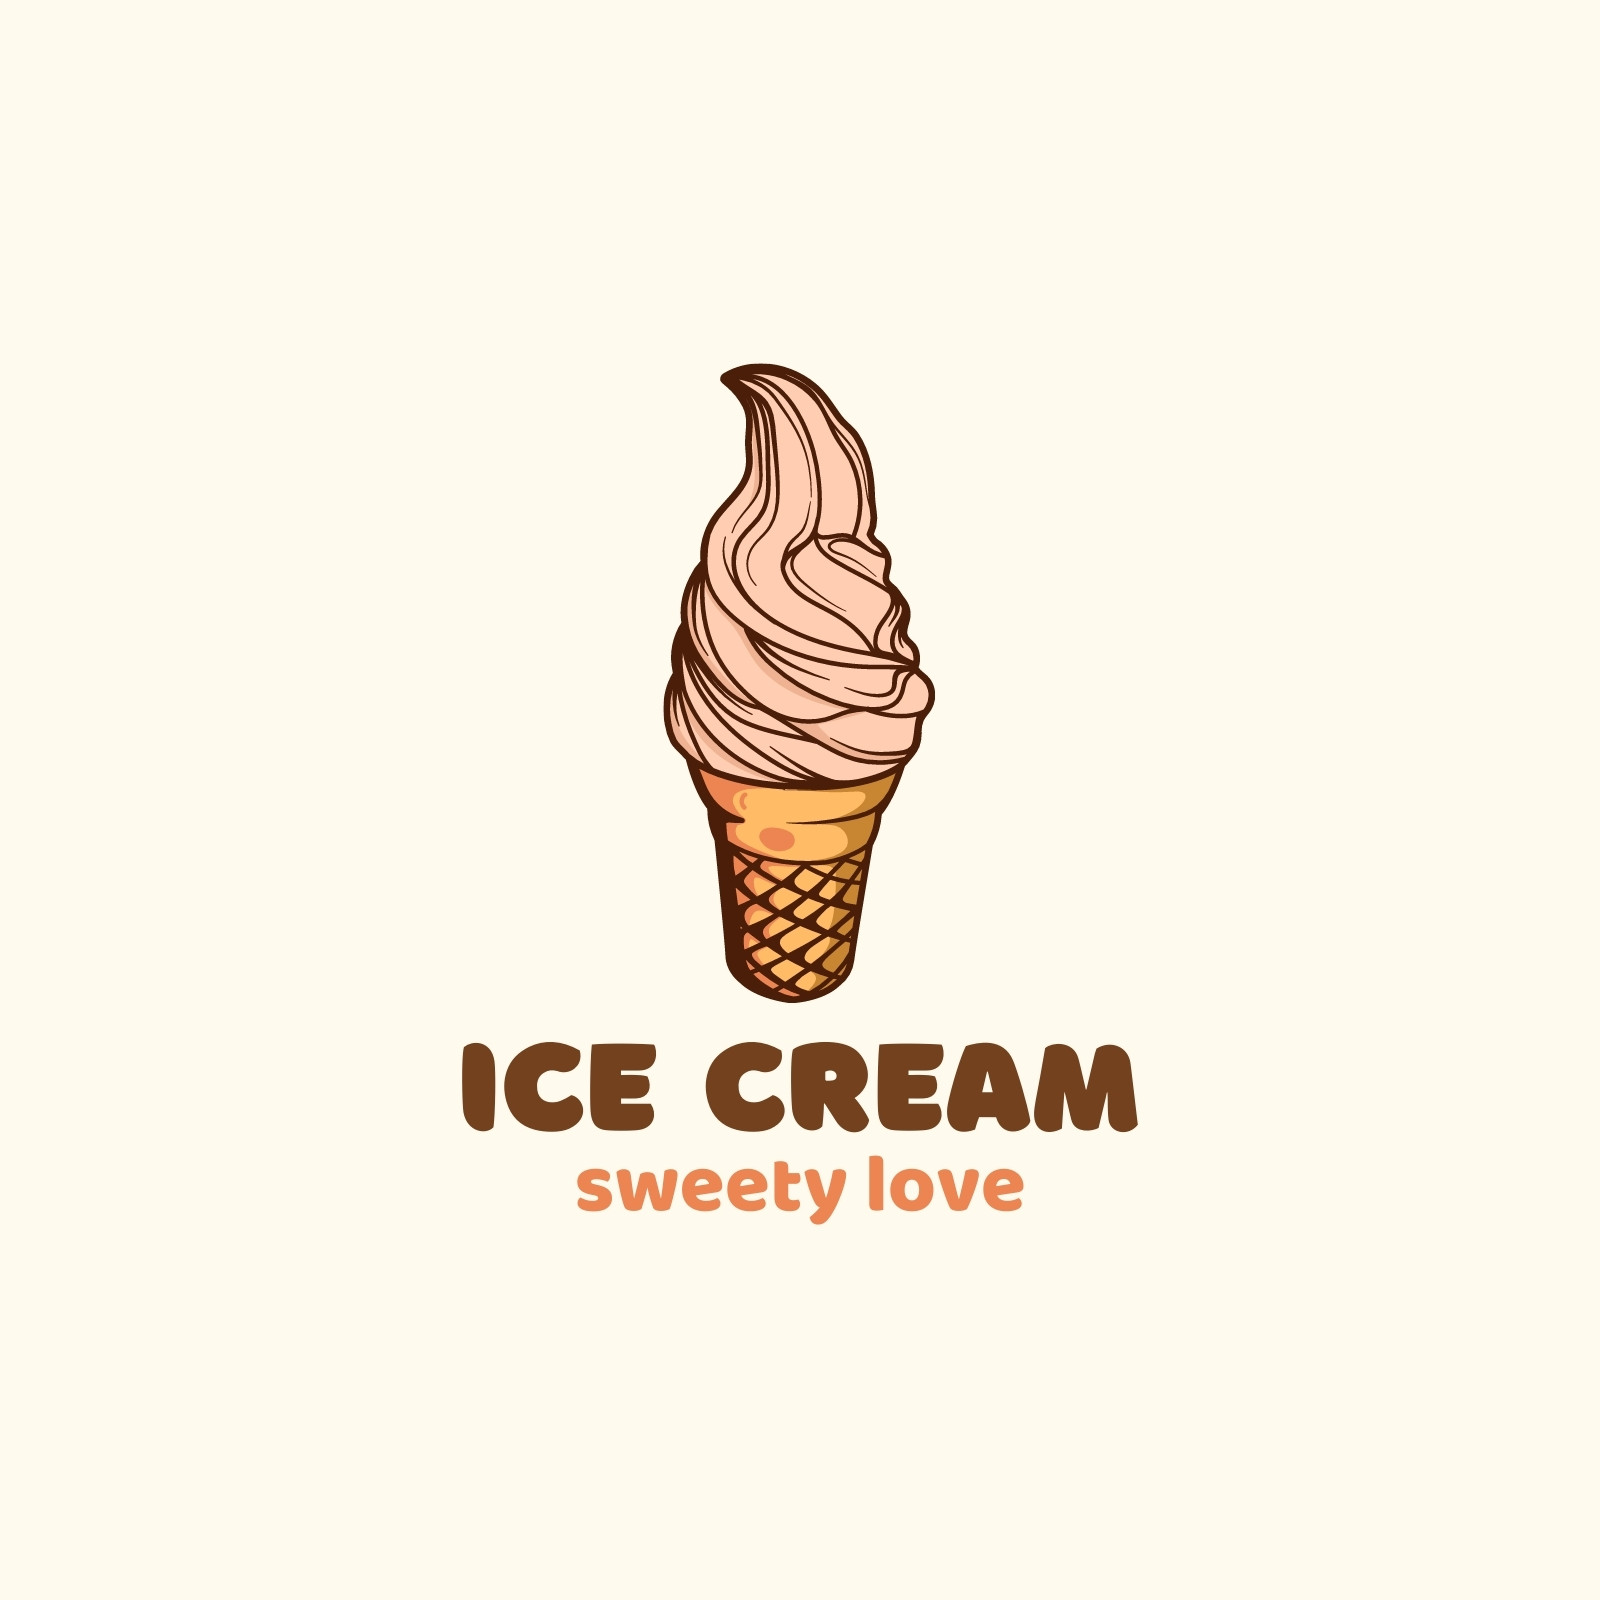 https://marketplace.canva.com/EAE7Io16oa0/1/0/1600w/canva-pink-illustrated-ice-cream-logo-esZuaytX9O0.jpg